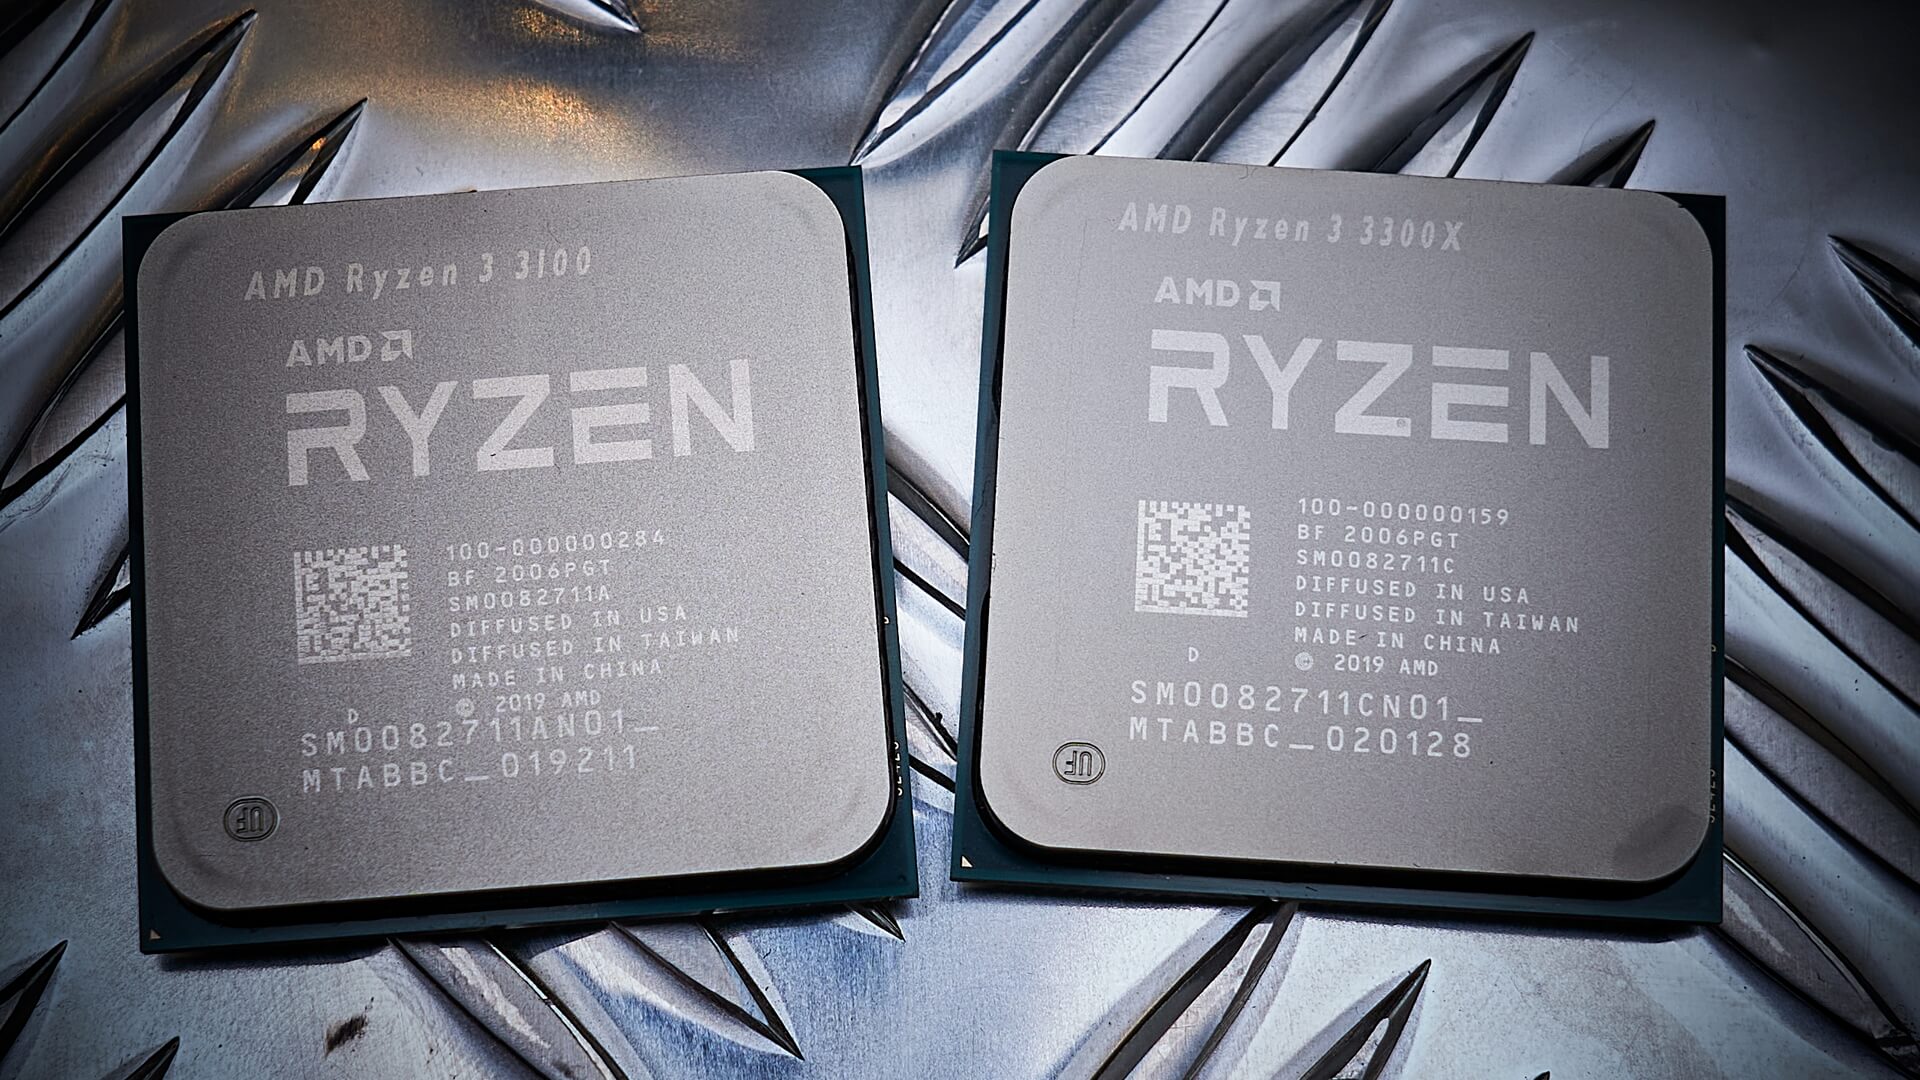 AMD Ryzen 3 3100 & 3300X review | WASD